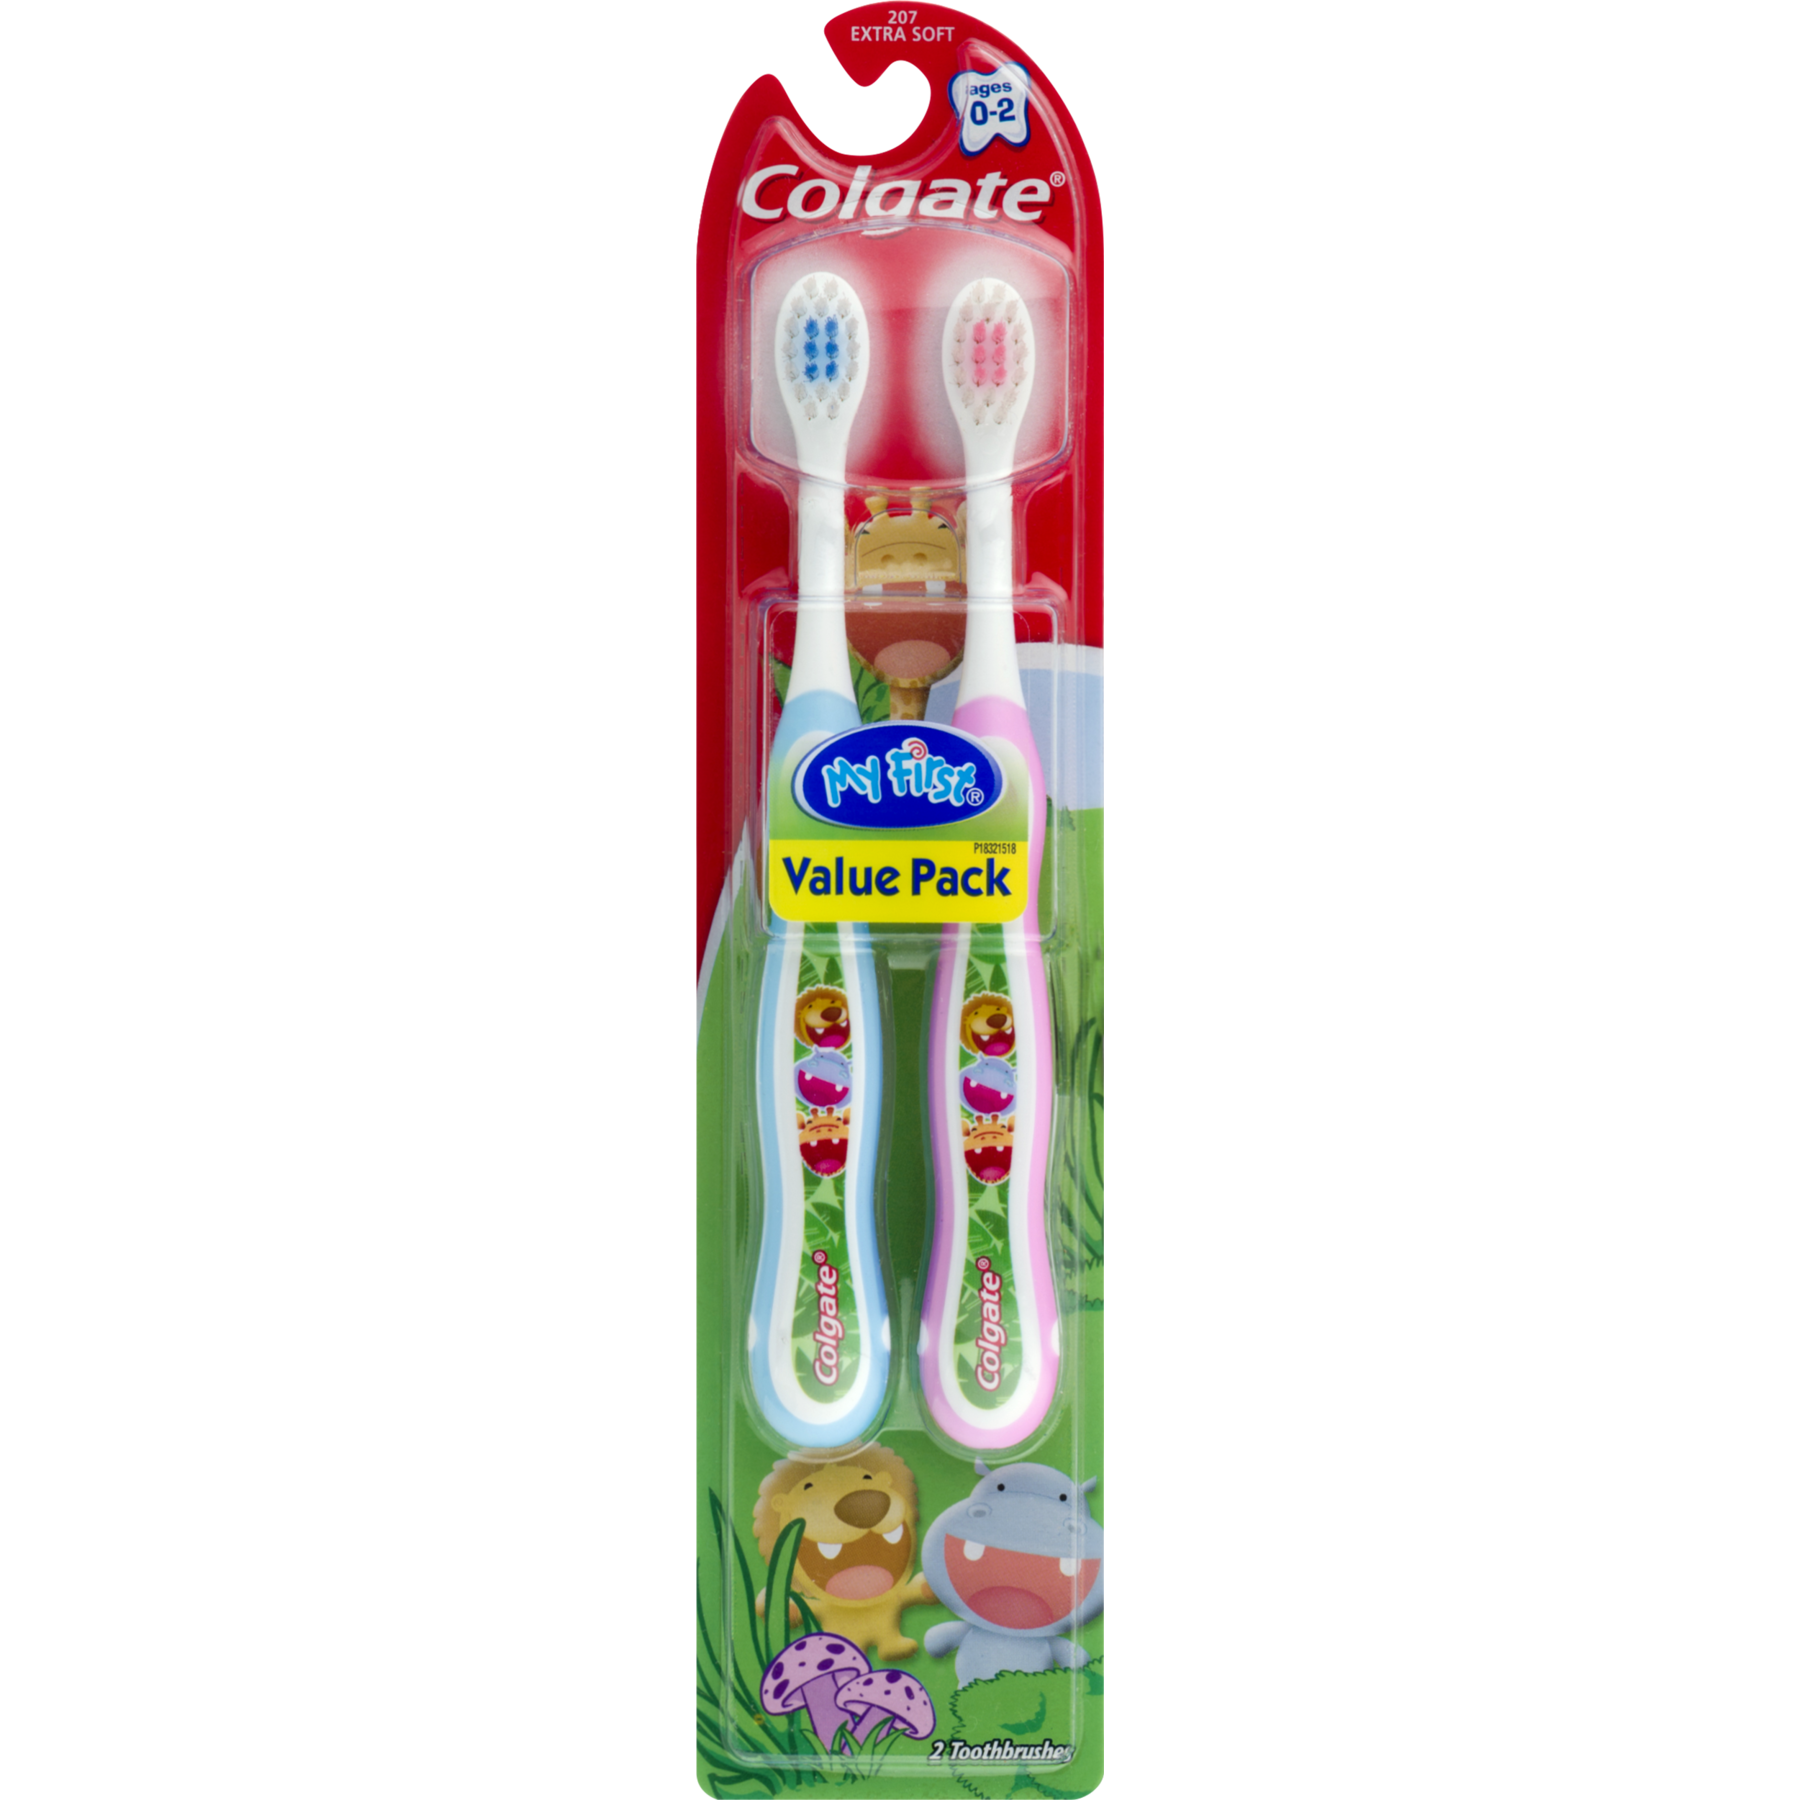 babys first toothbrush